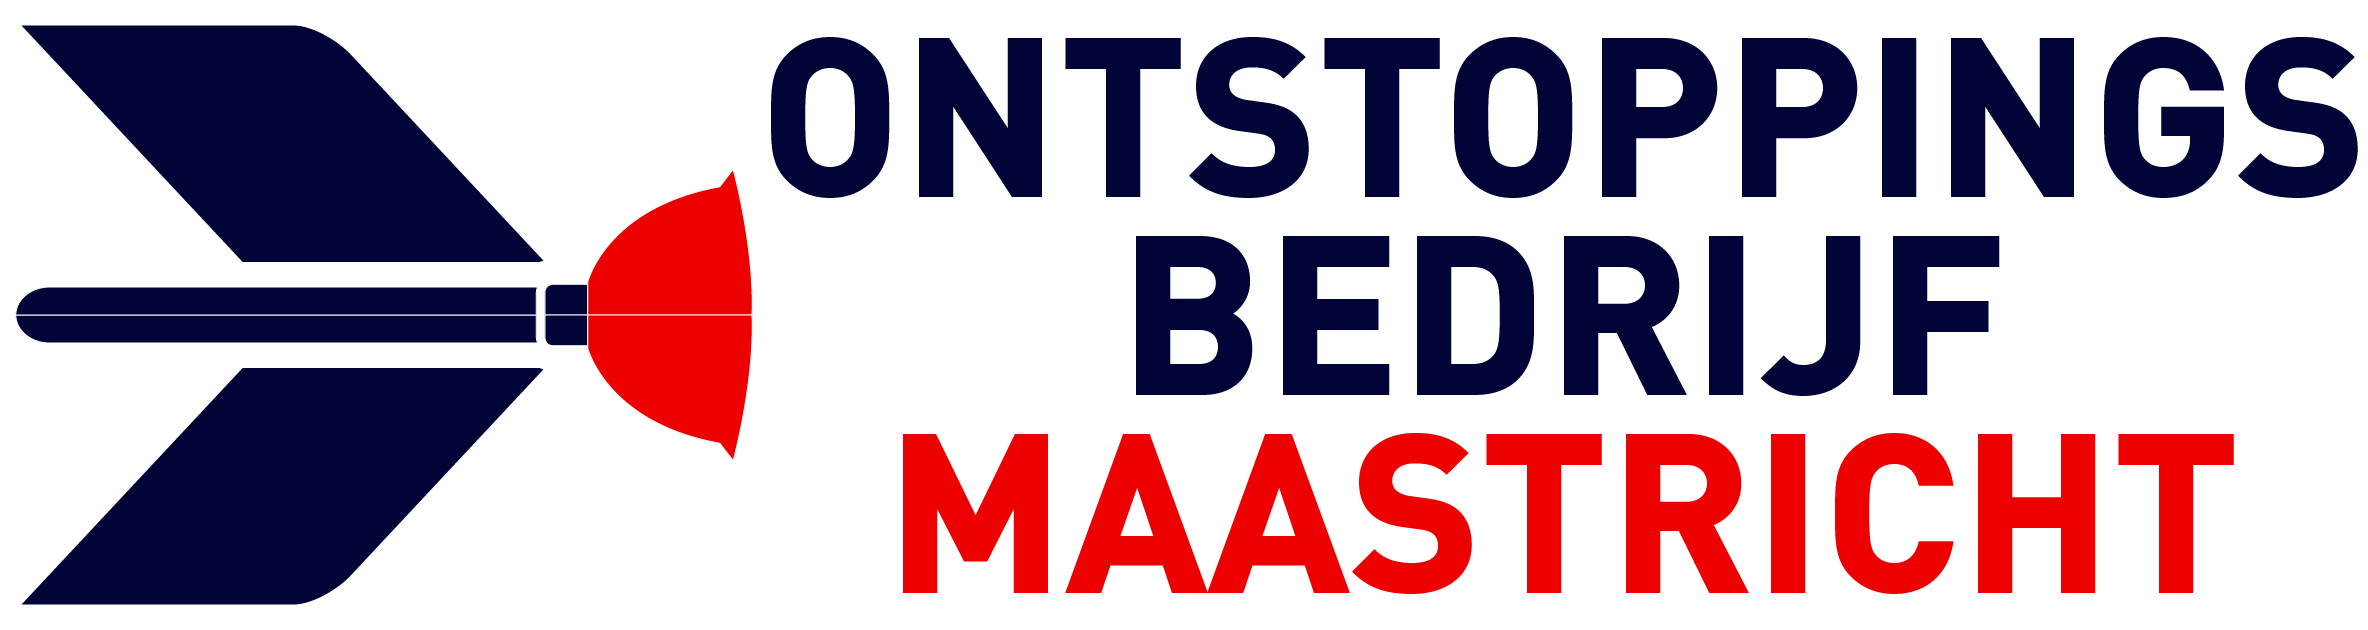 Ontstoppingsbedrijf Maastricht logo